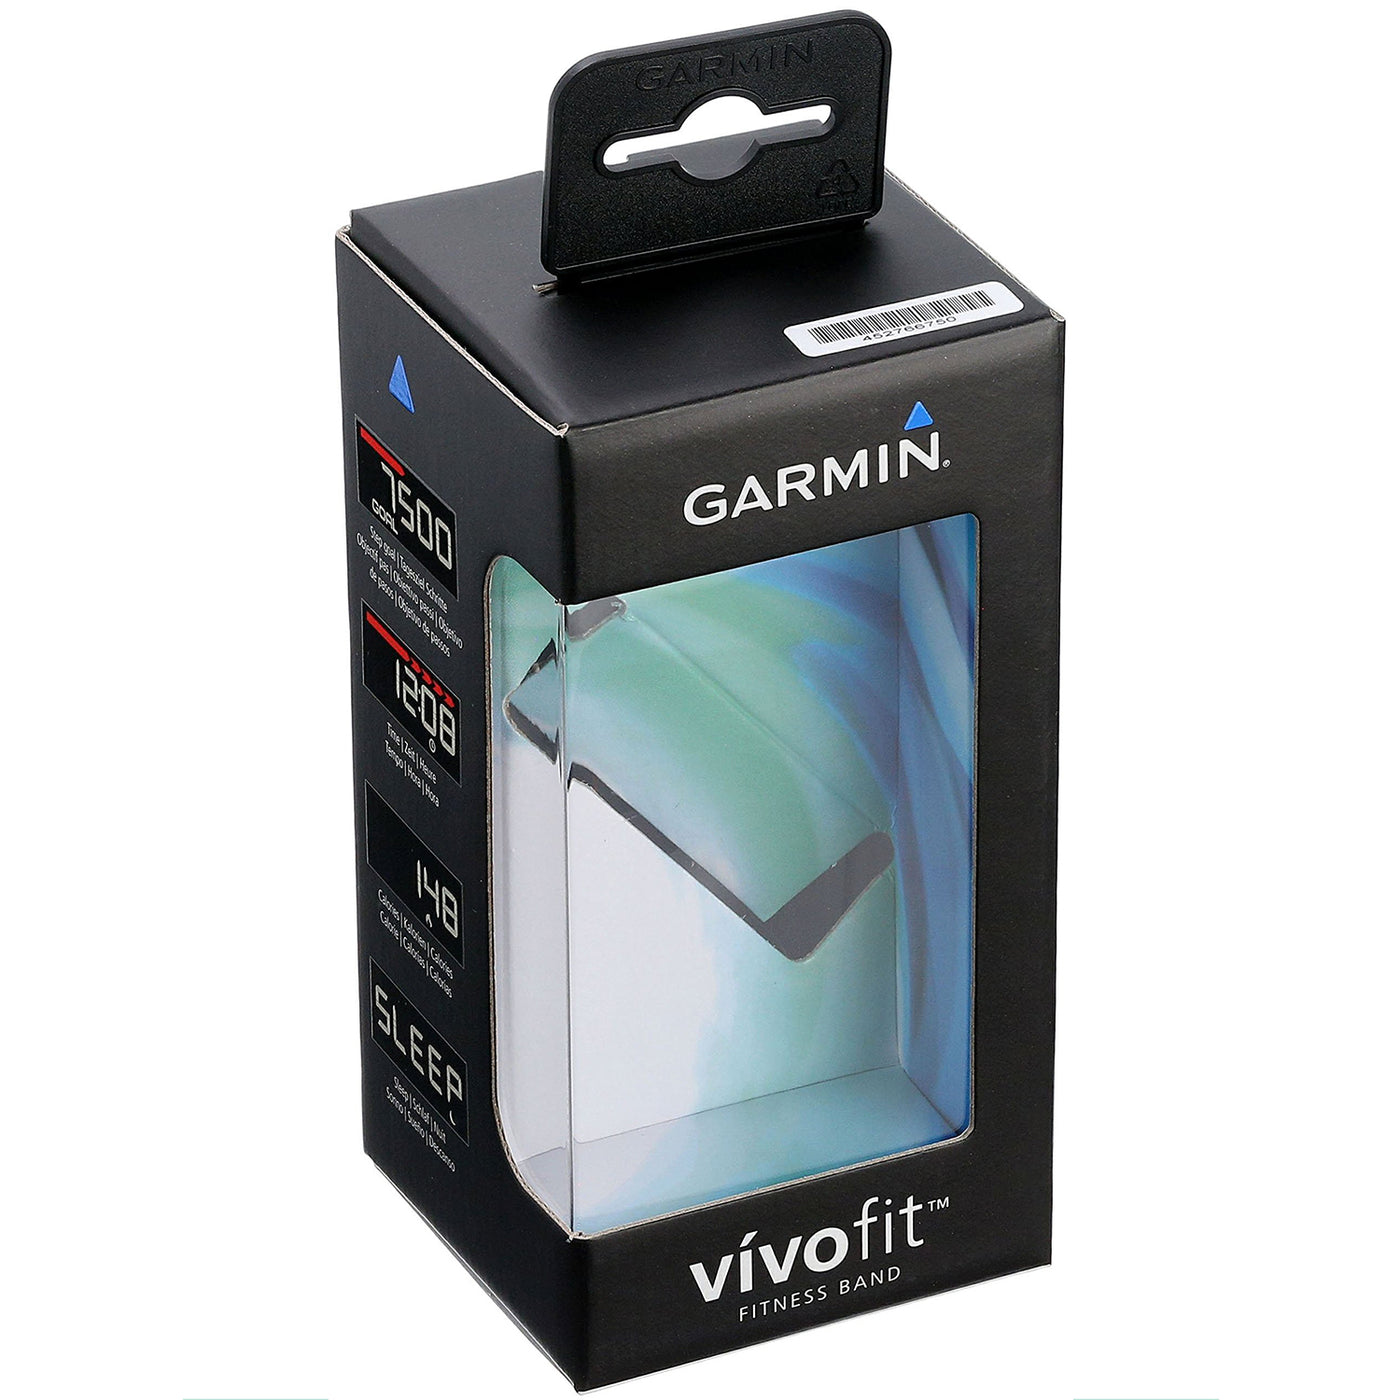 Garmin vvofit Fitness Band - Black (Renewed) certified refurbished product certified refurbished product certified refurbished product